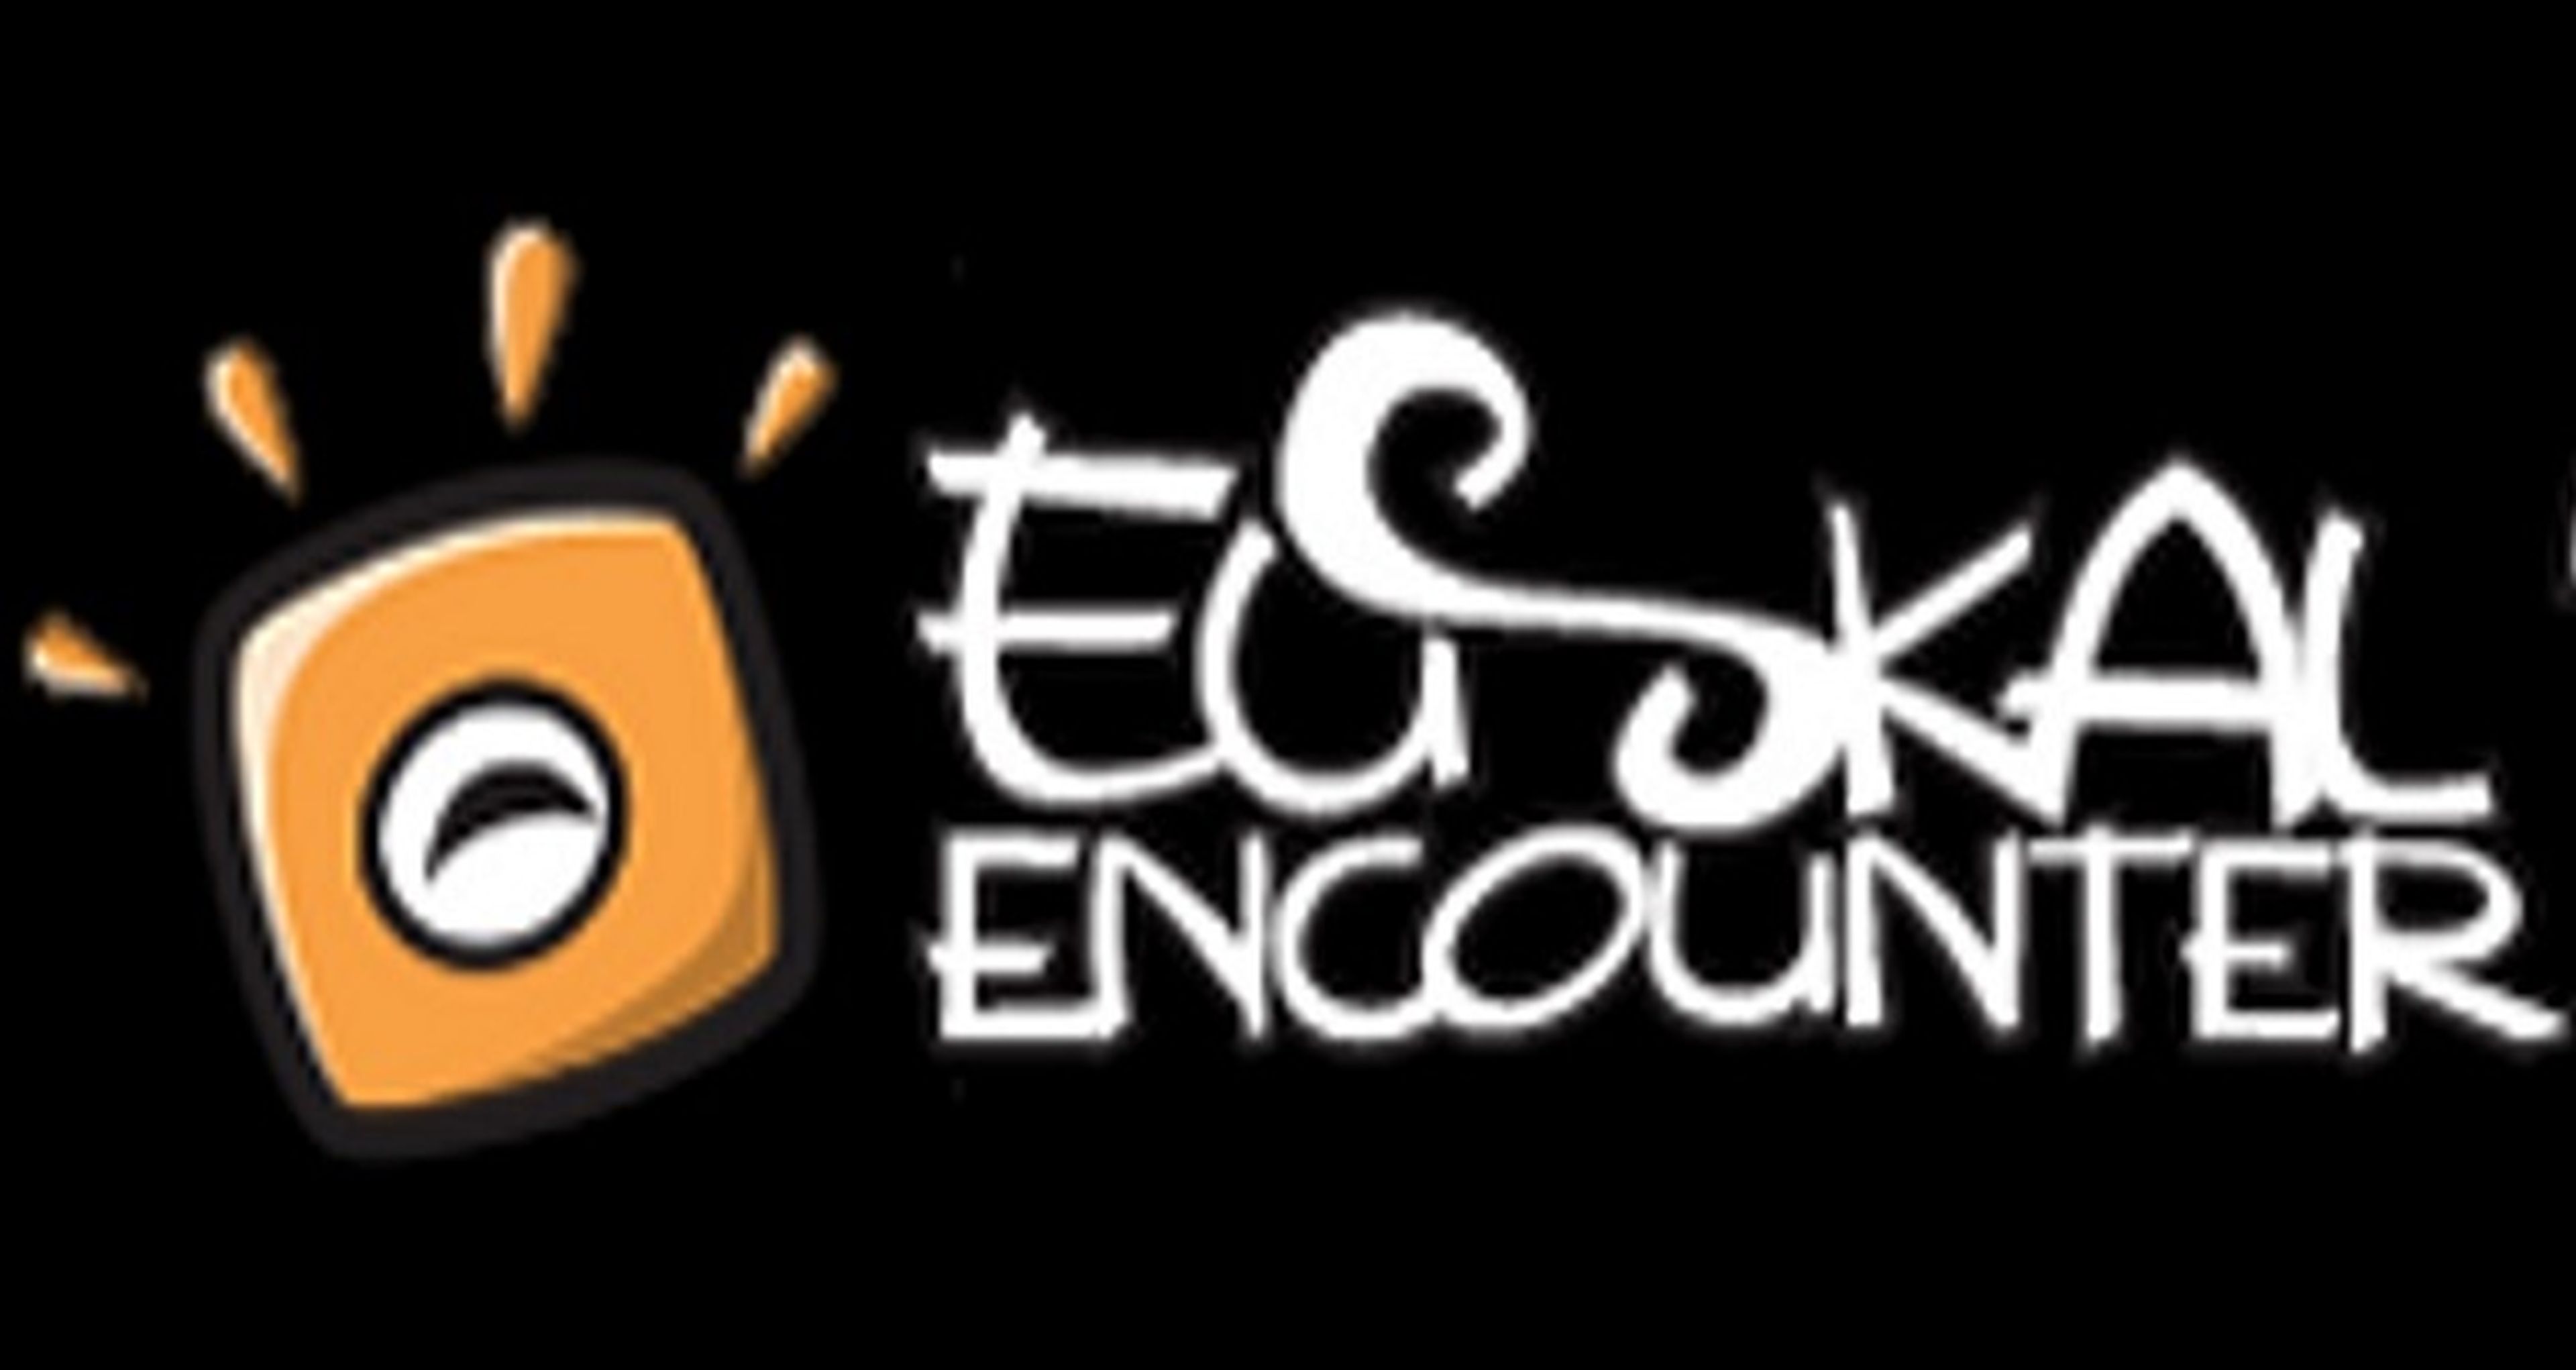 Euskal Encounter cumple 22 ediciones